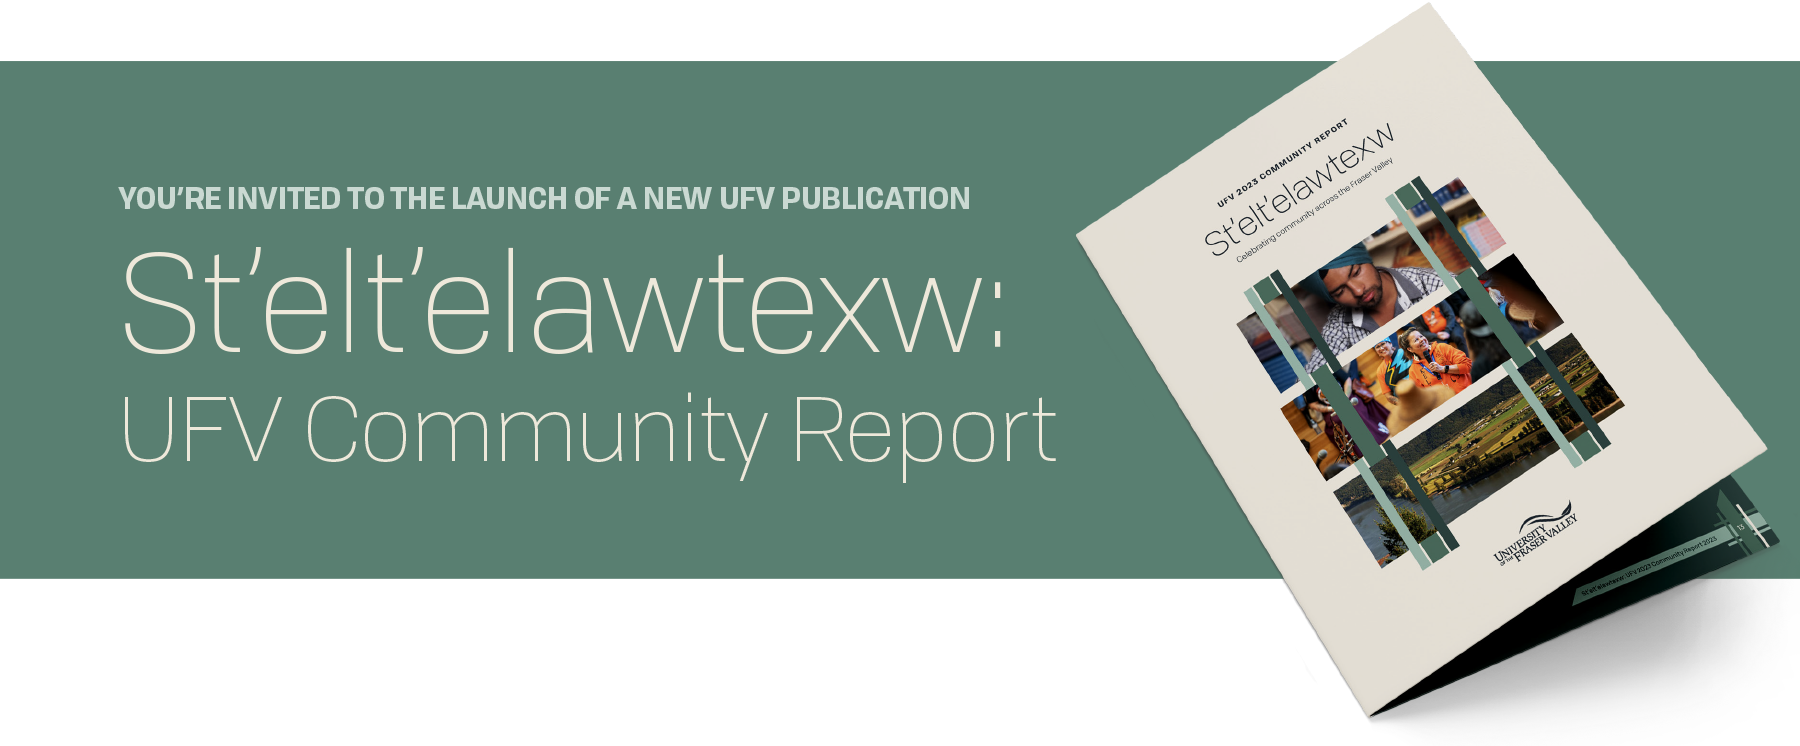 UFV Community Report launch experience (Chilliwack Campus)